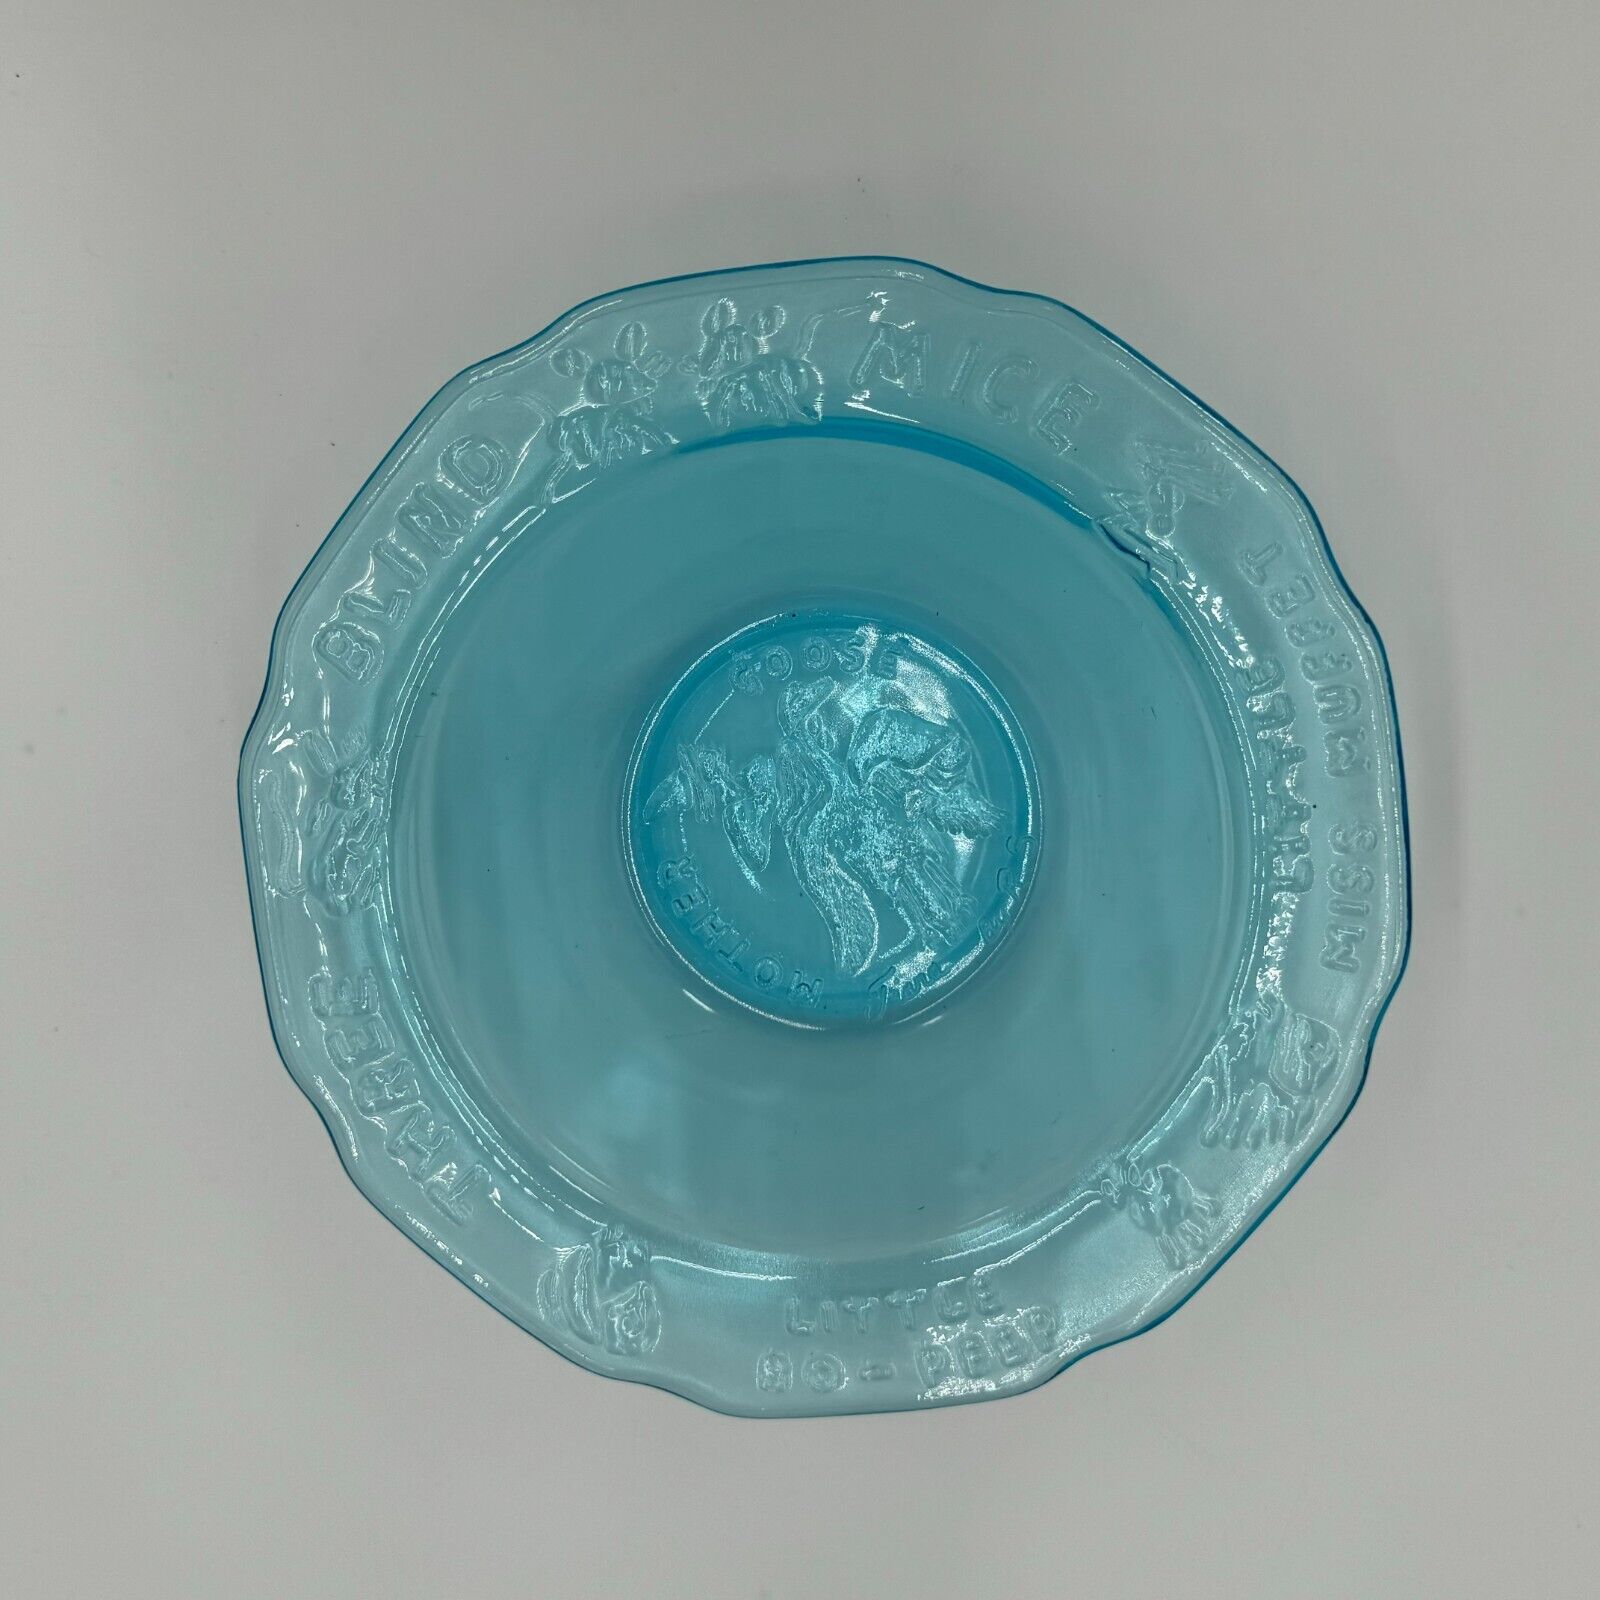 Tiara by RS - BLUE Glass NURSERY RHYME BOWL - Mother Goose 3 Blind Mice Vintage